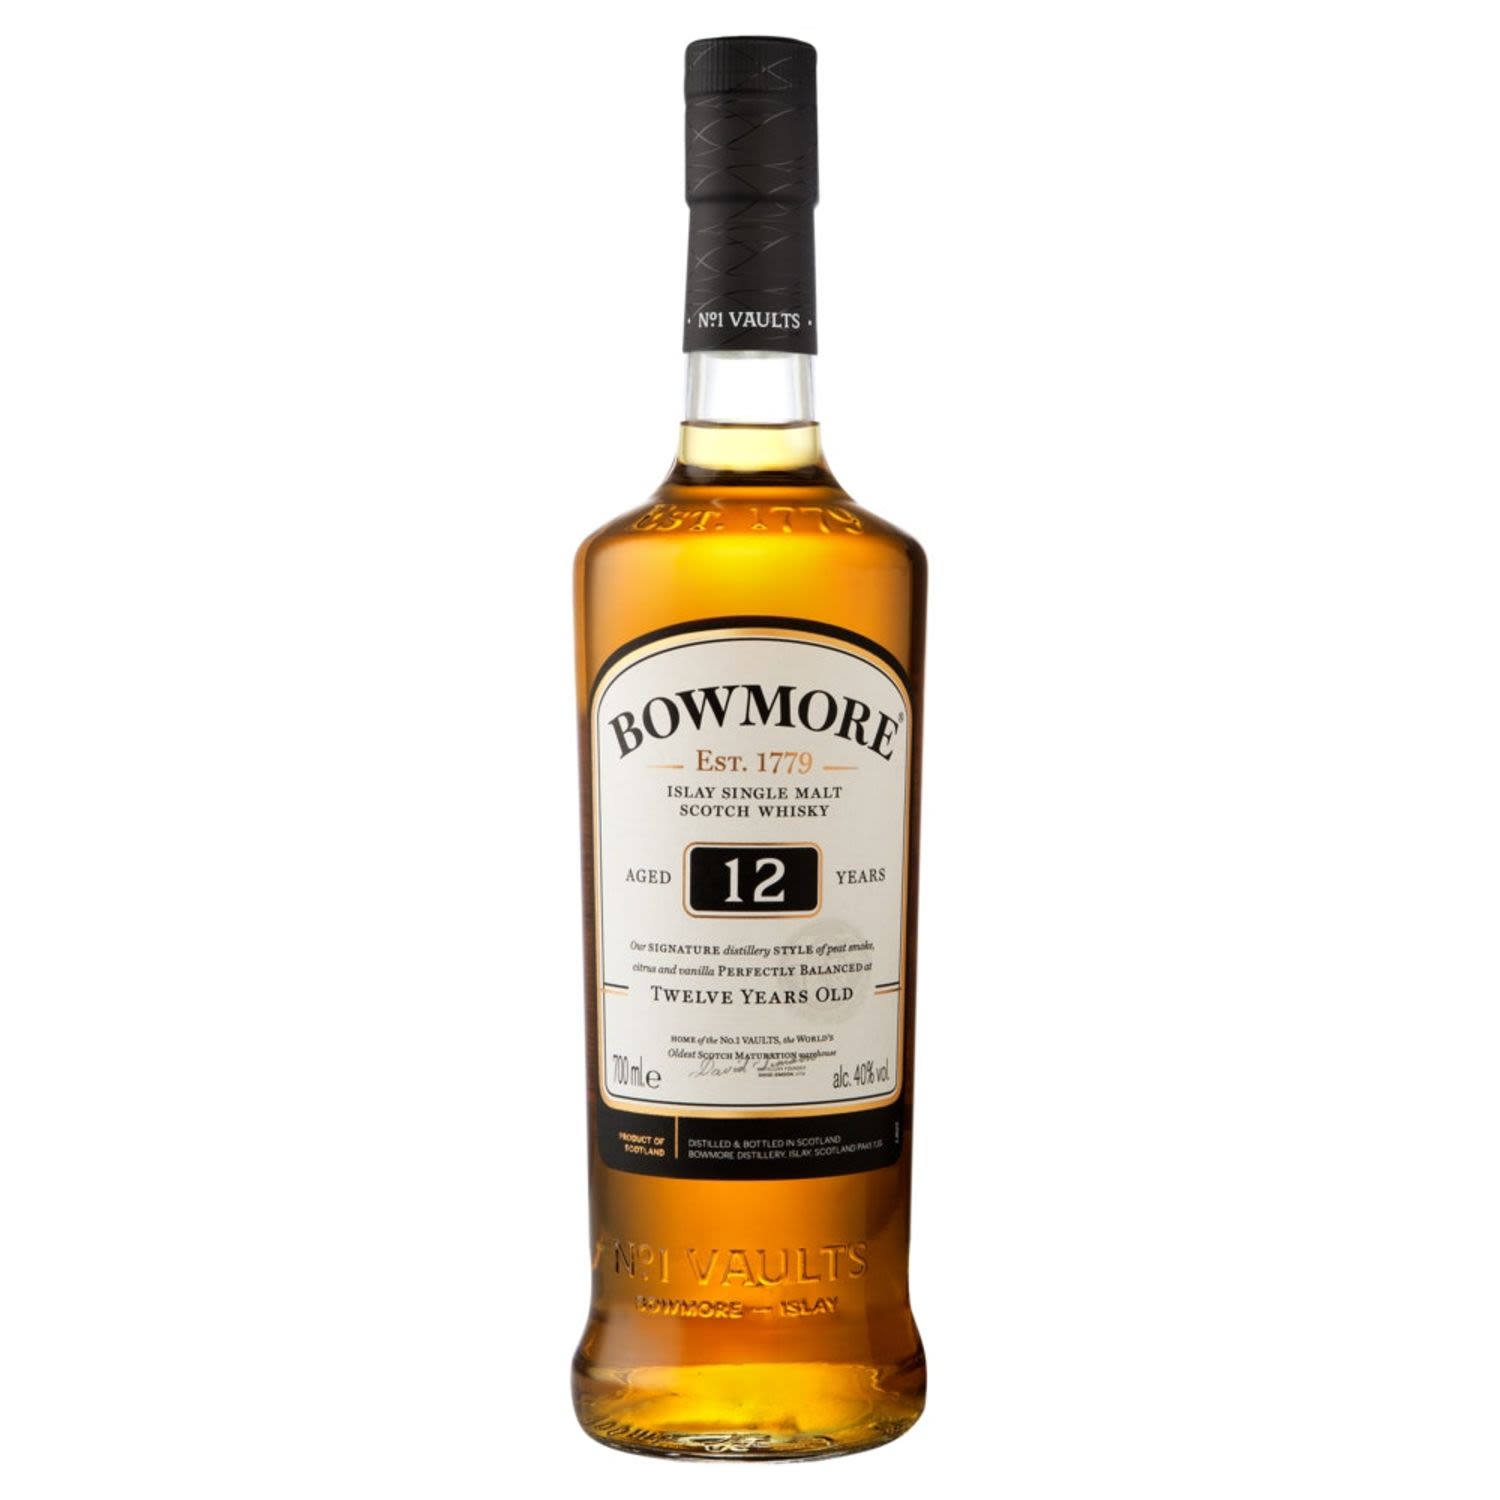 Bowmore Islay Single Malt Scotch Whisky 12 Year Old 700mL 6 Pack